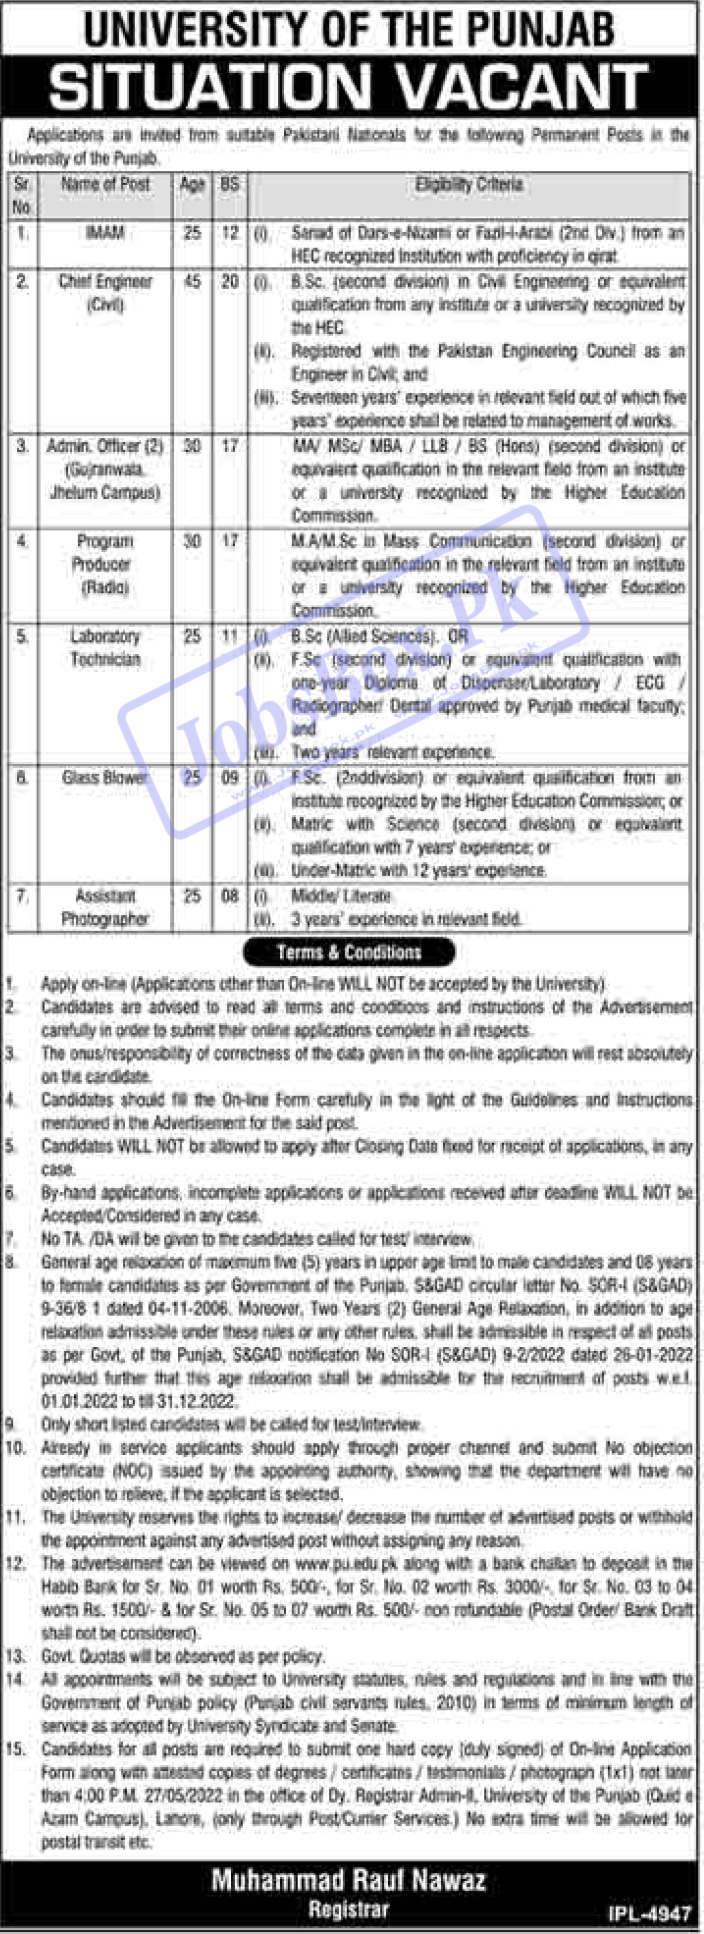 NADRA Jobs 2022 PO Box 3249 Islamabad – Application Form